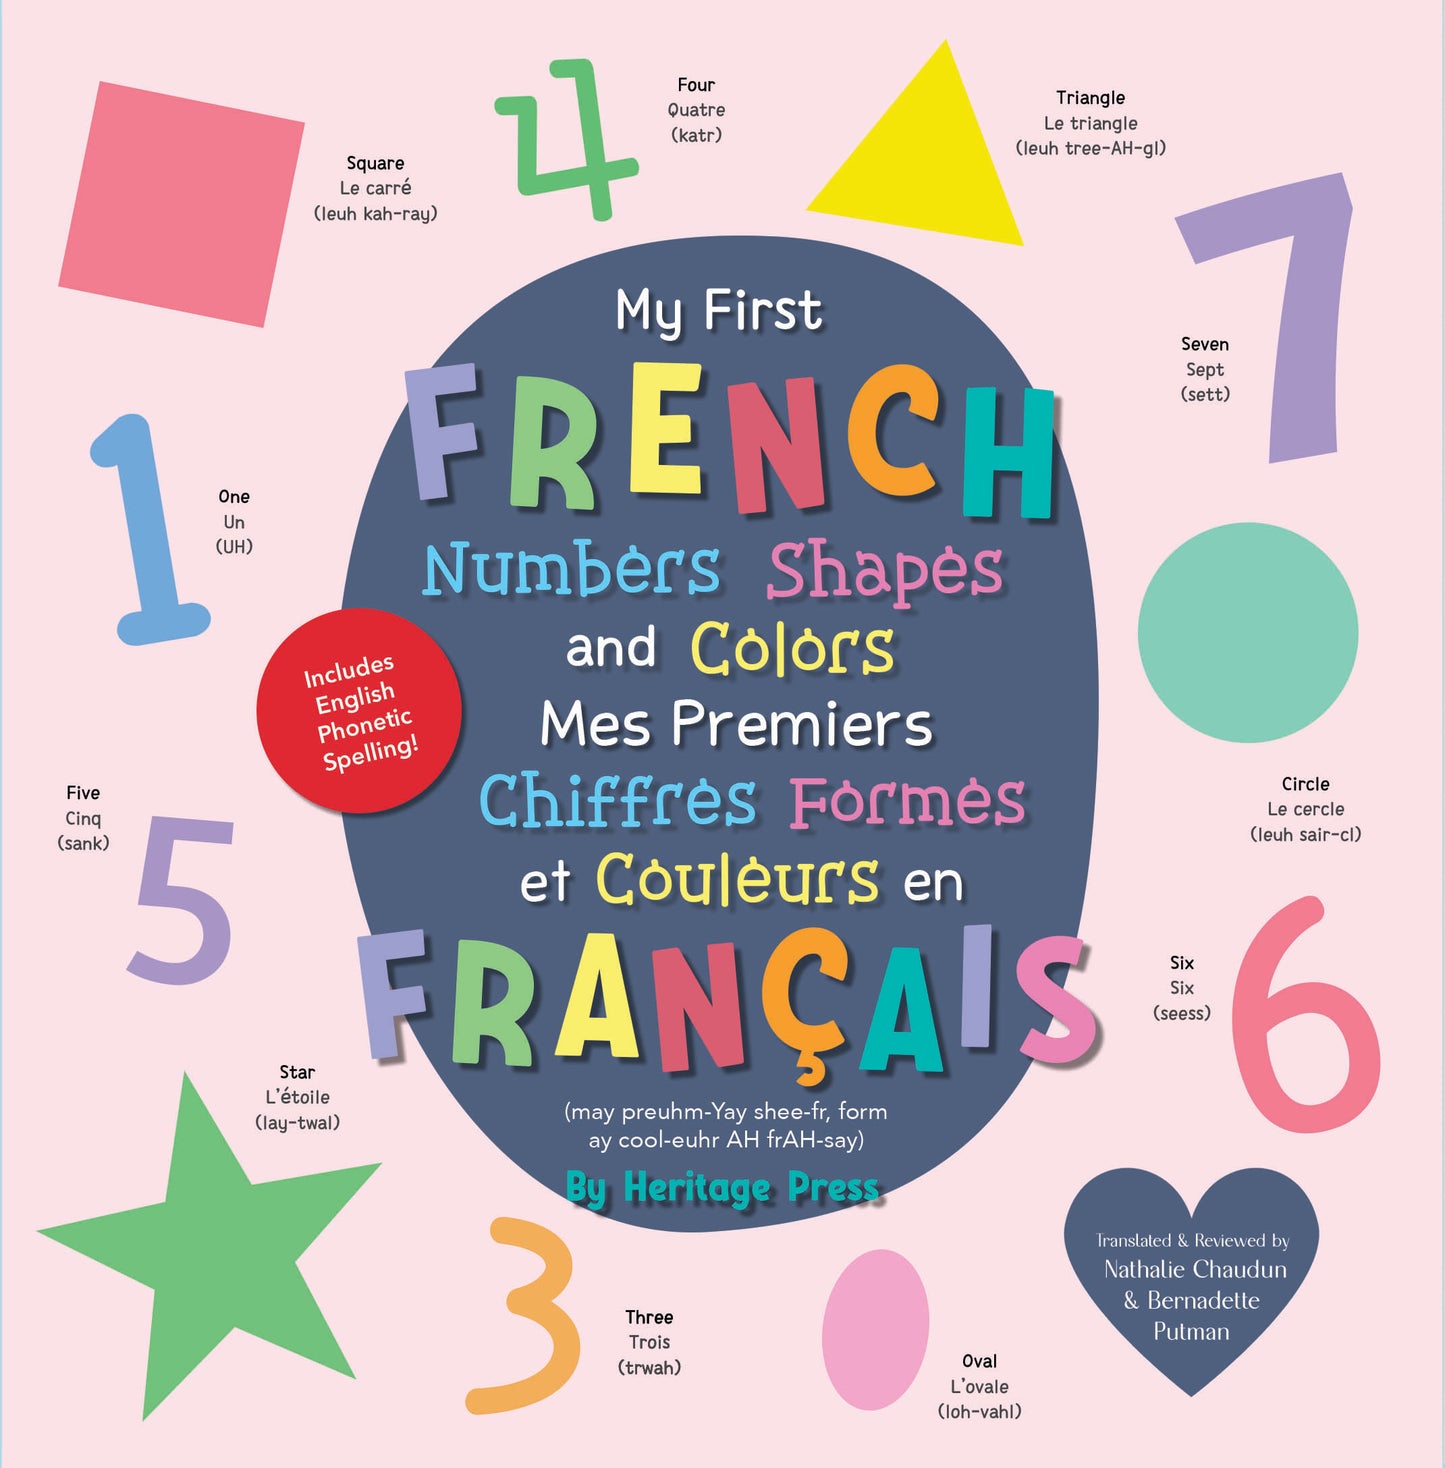 My First French Numbers, Shapes, and Colors / Mes Premiers Chiffres, Formes et Couleurs en Français